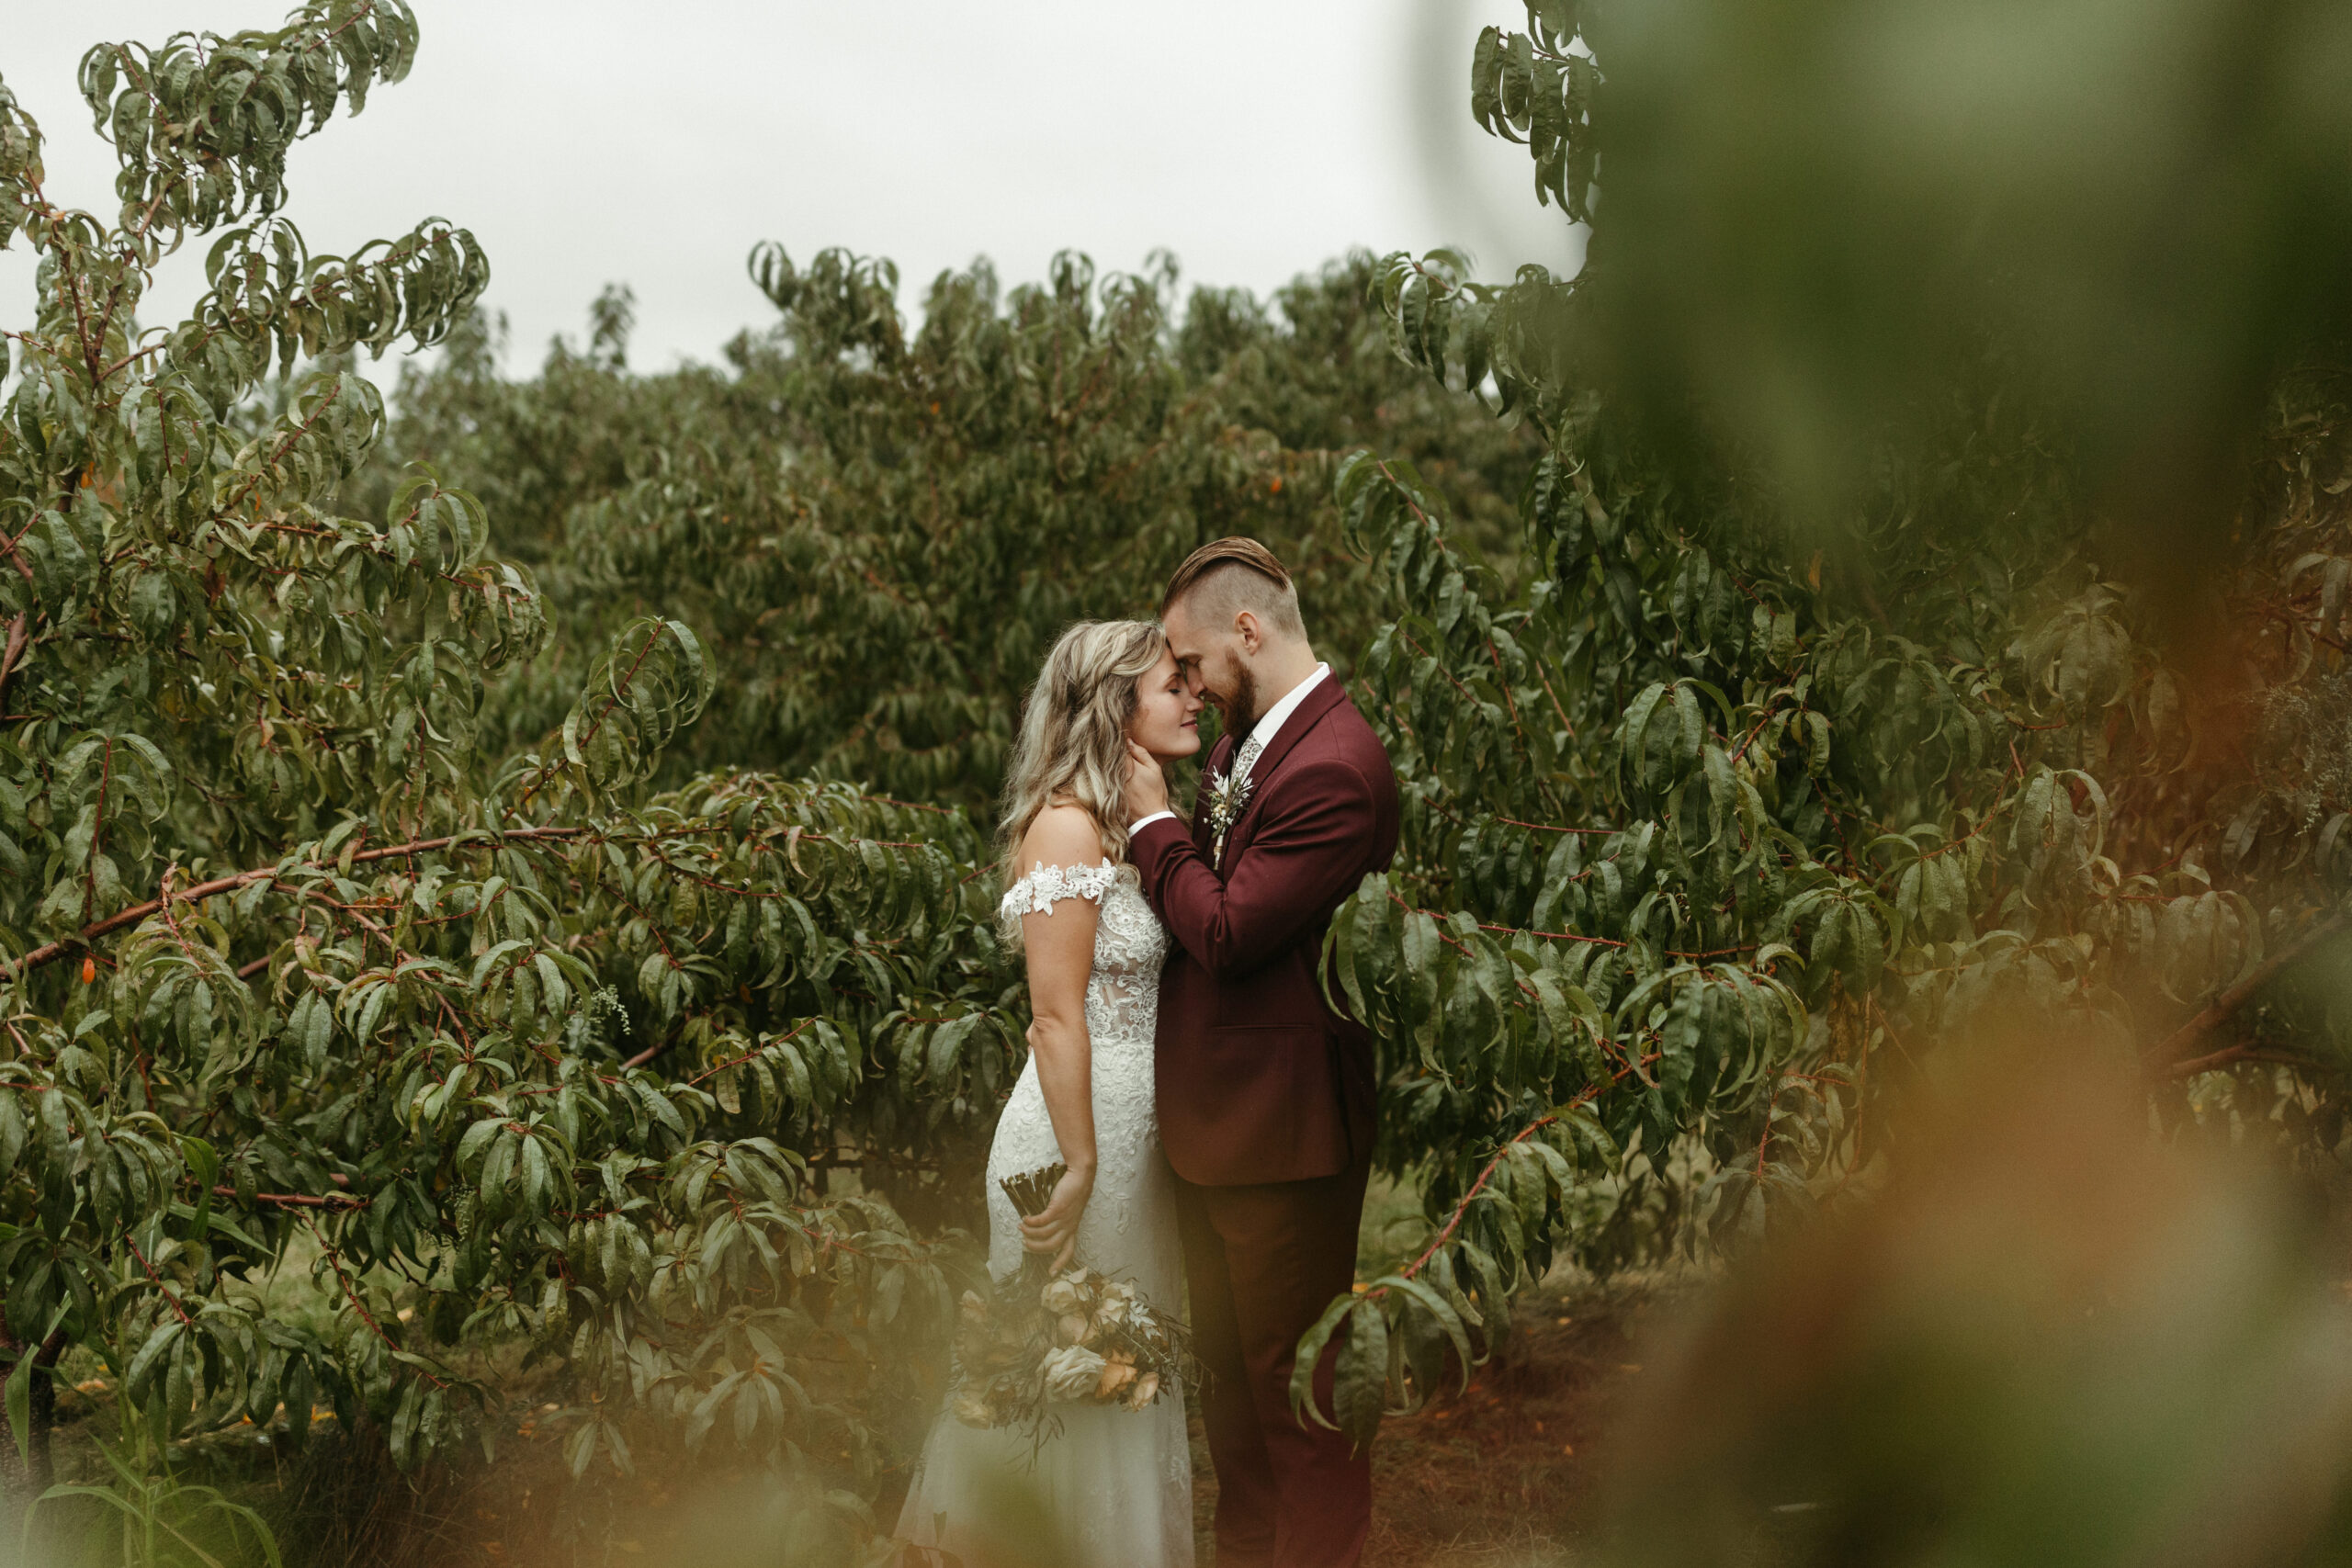 Jacobs Farm Northern Michigan rainy fall wedding by Josh Rexford, Michigan photographer & videographer